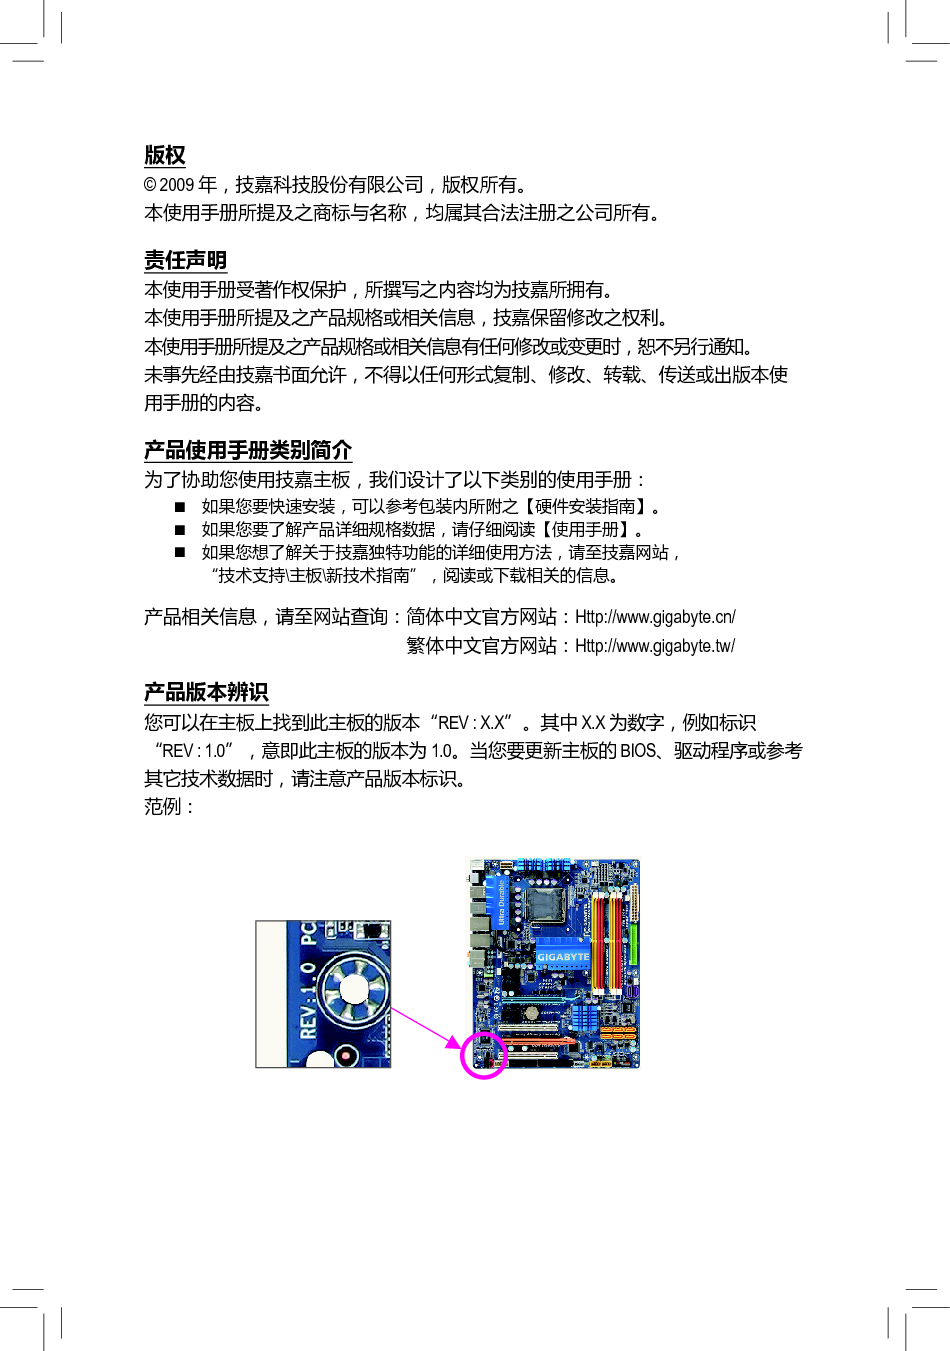 技嘉 Gigabyte GA-EP41-UD3L 使用手册 第2页